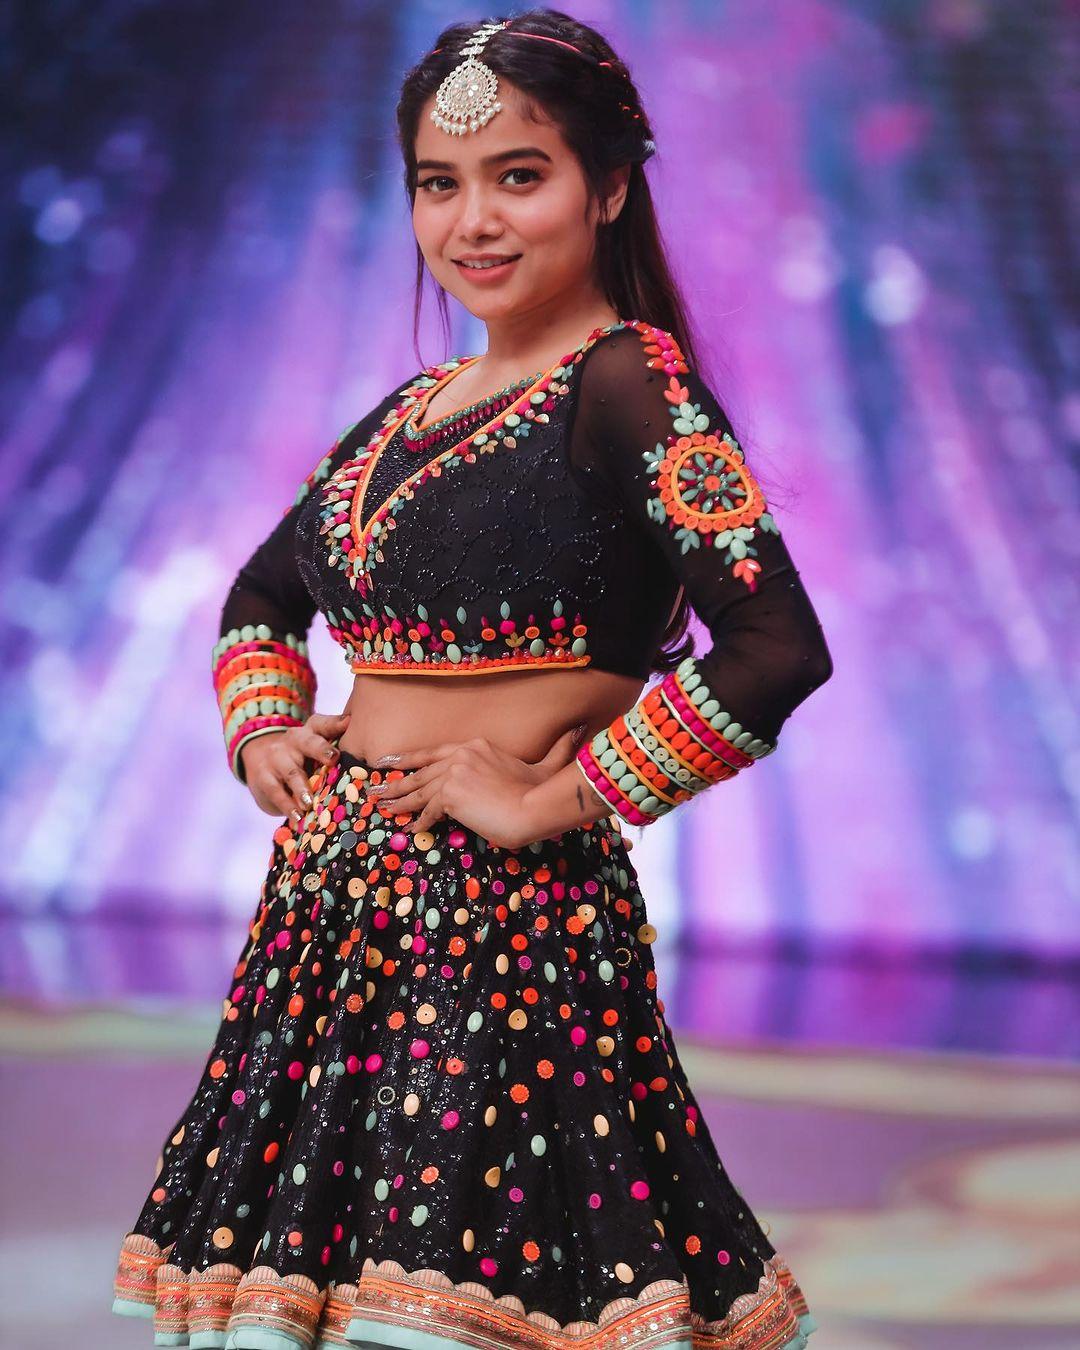 Manisha Rani was among the 5 wild cards who entered the show mid-season